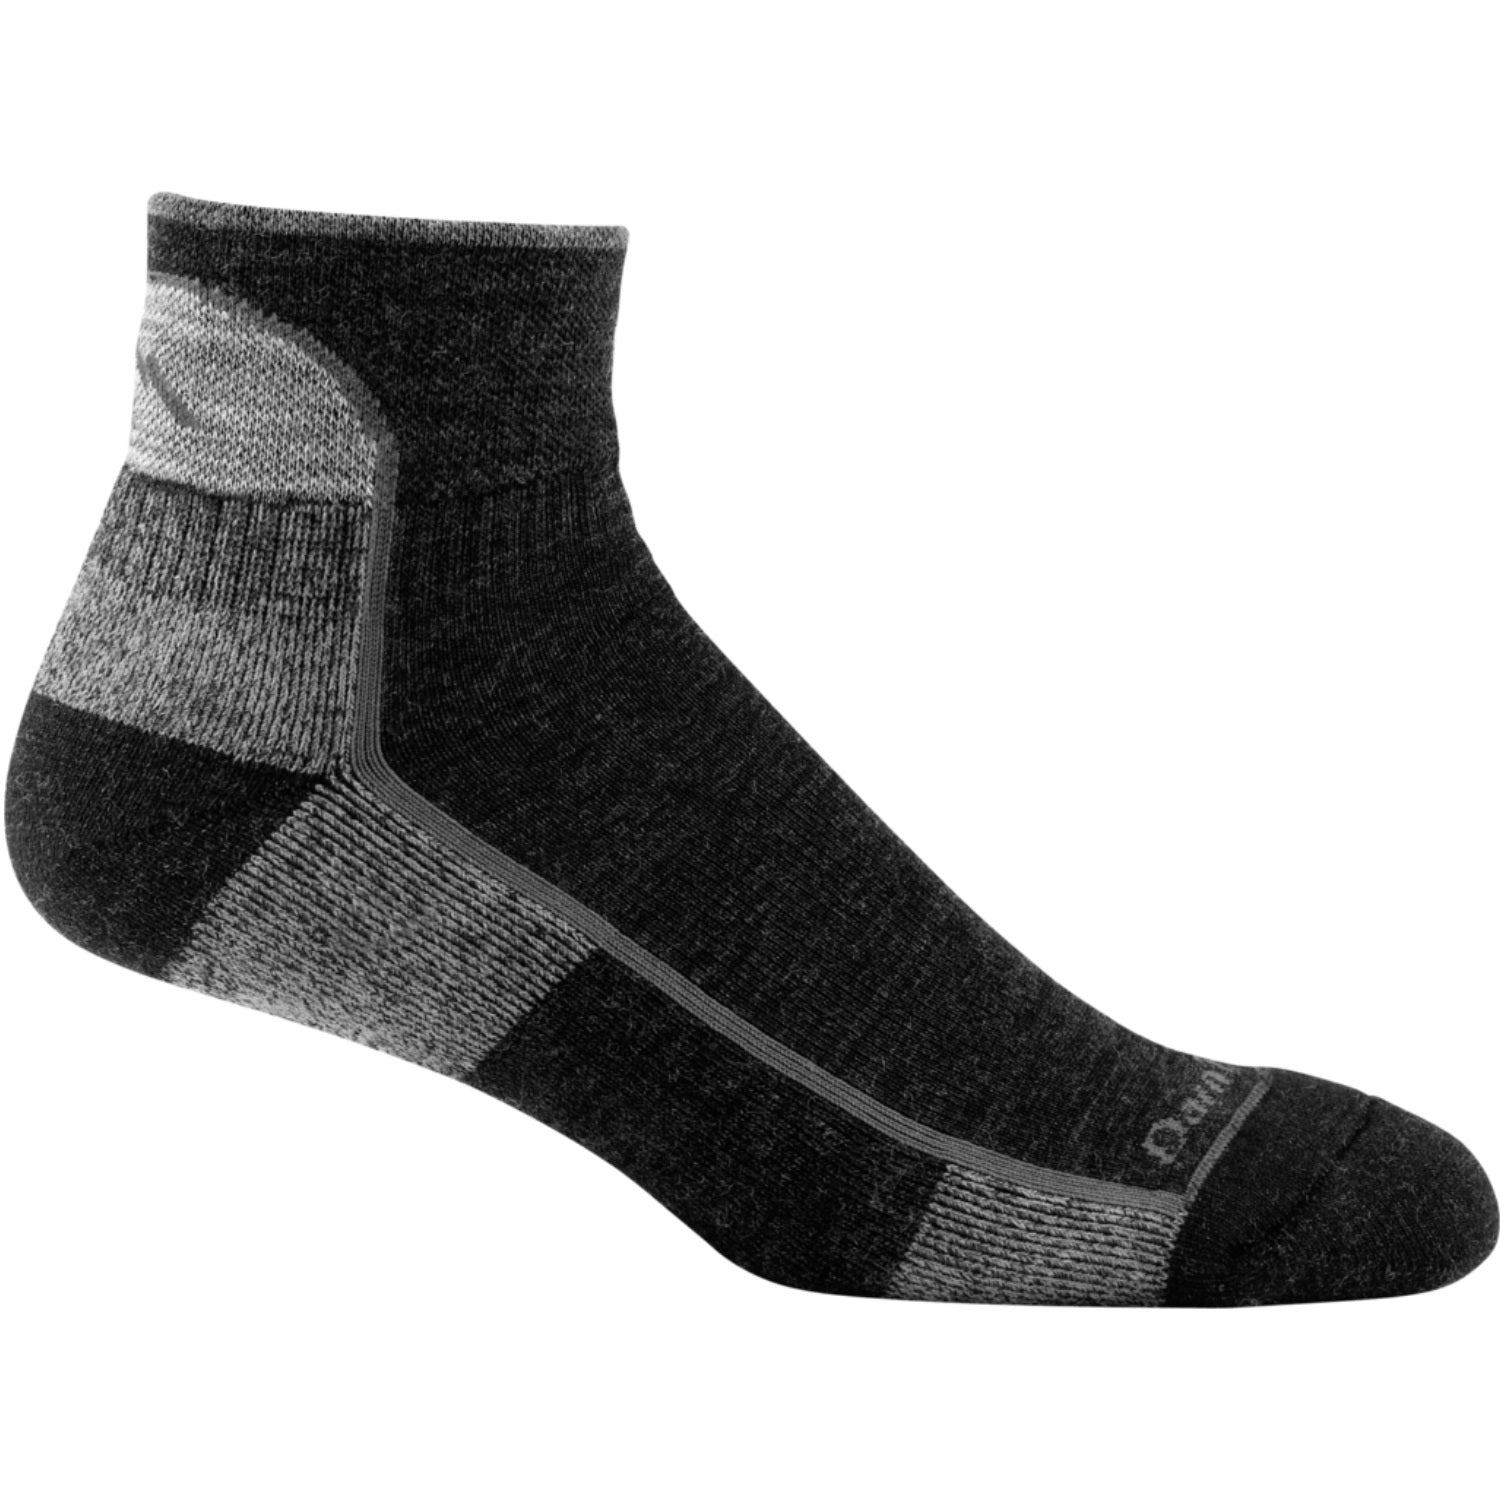 Darn Tough 1/4 - Merino Wool Cushioned Sock - Men's